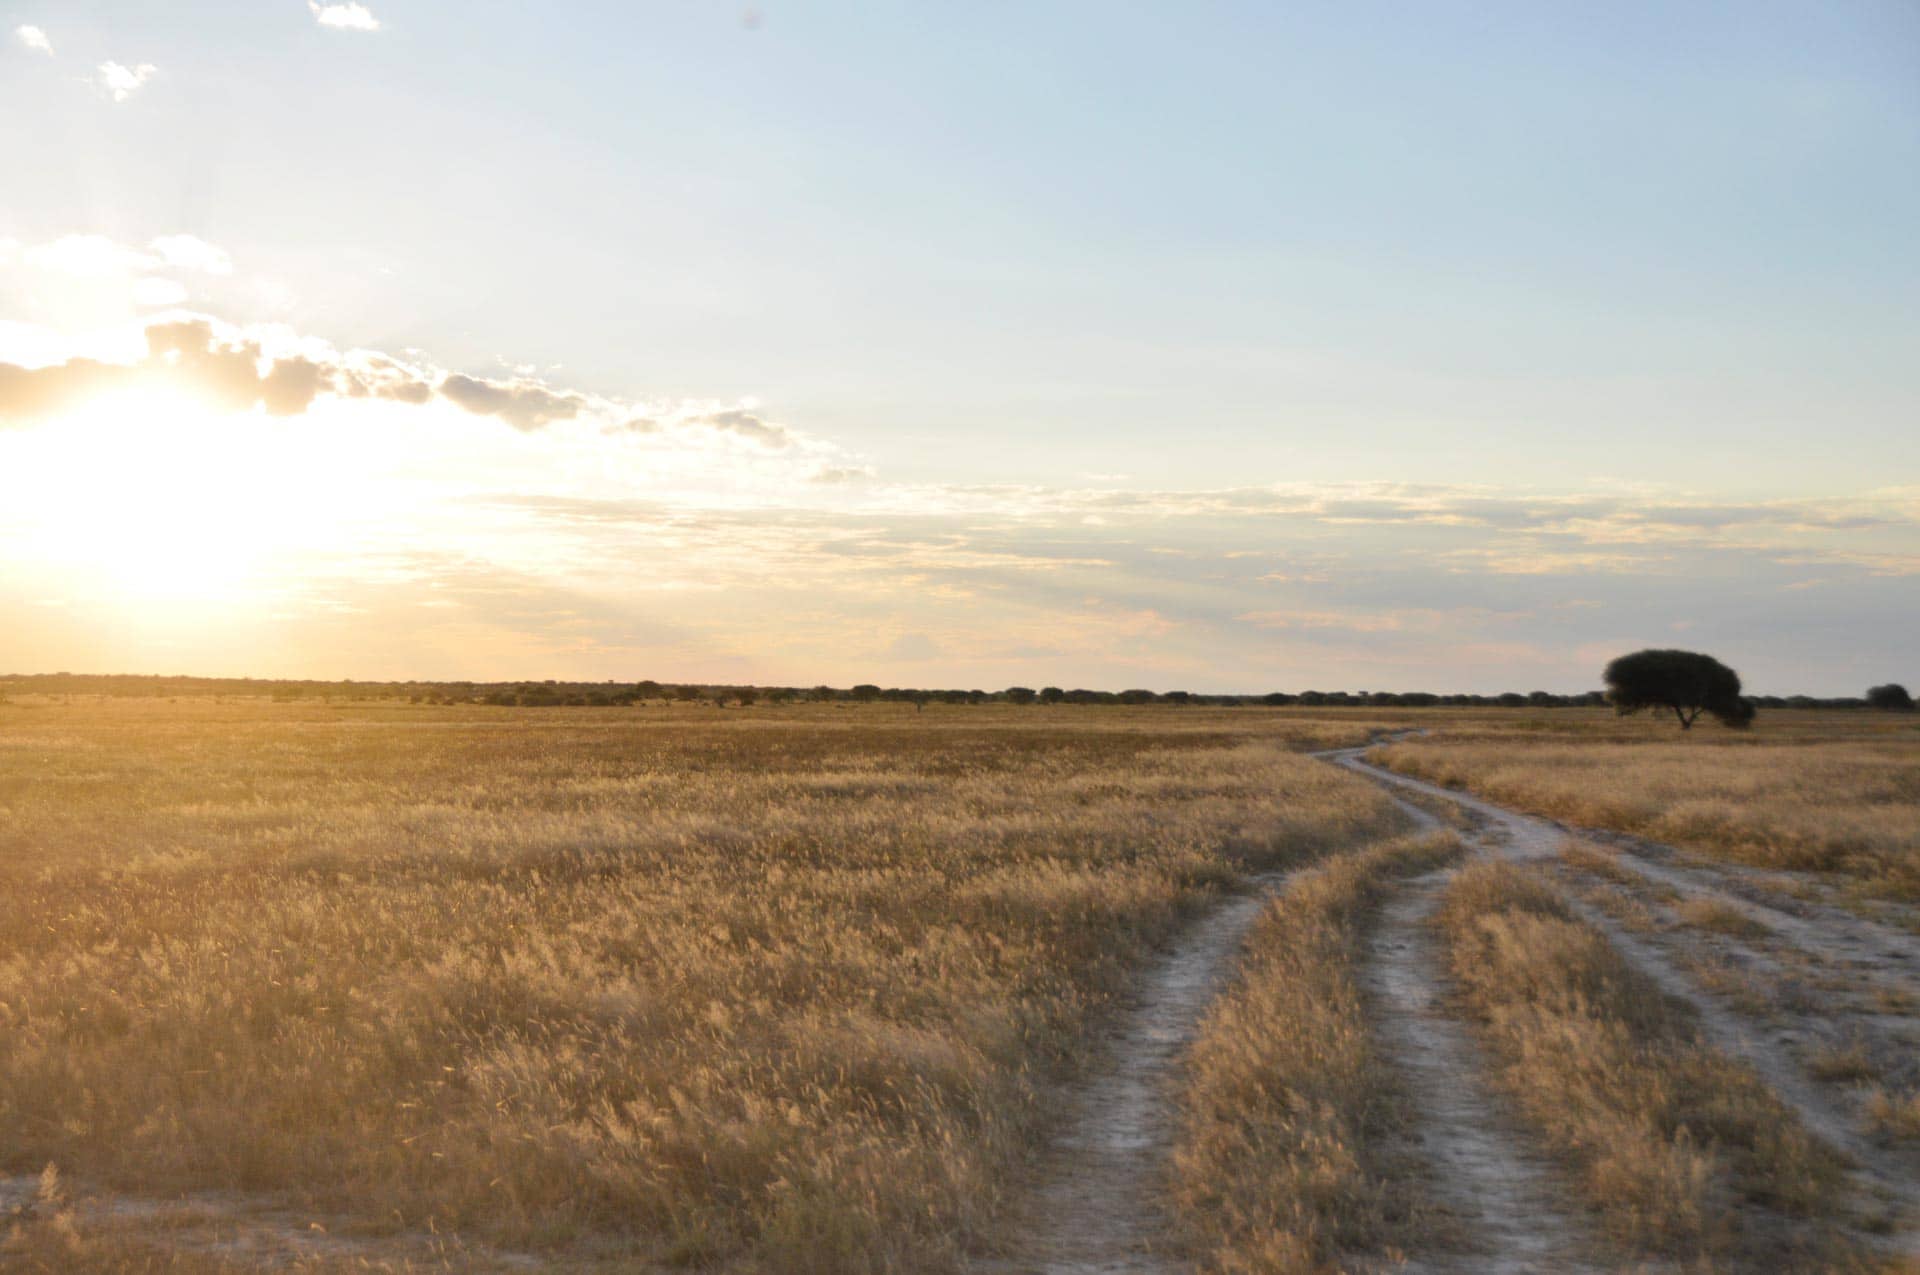 Central Kalahari in Botswana